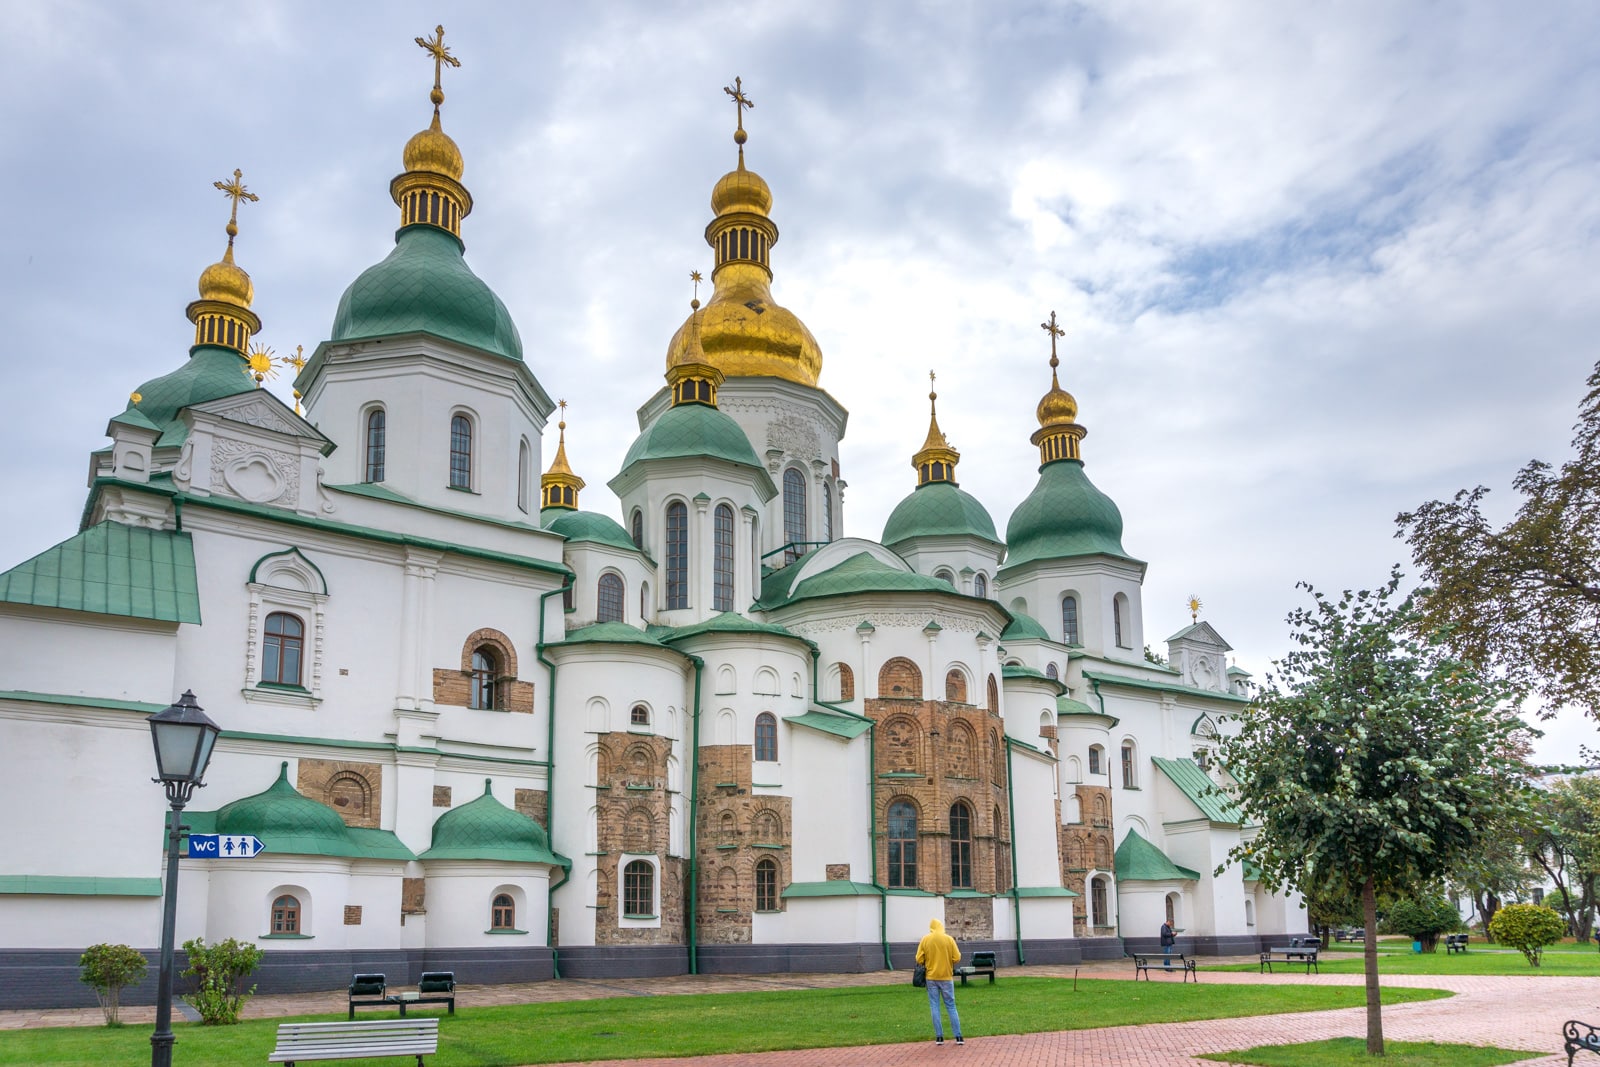 St. Sophia monastery in Kyiv, Ukraine